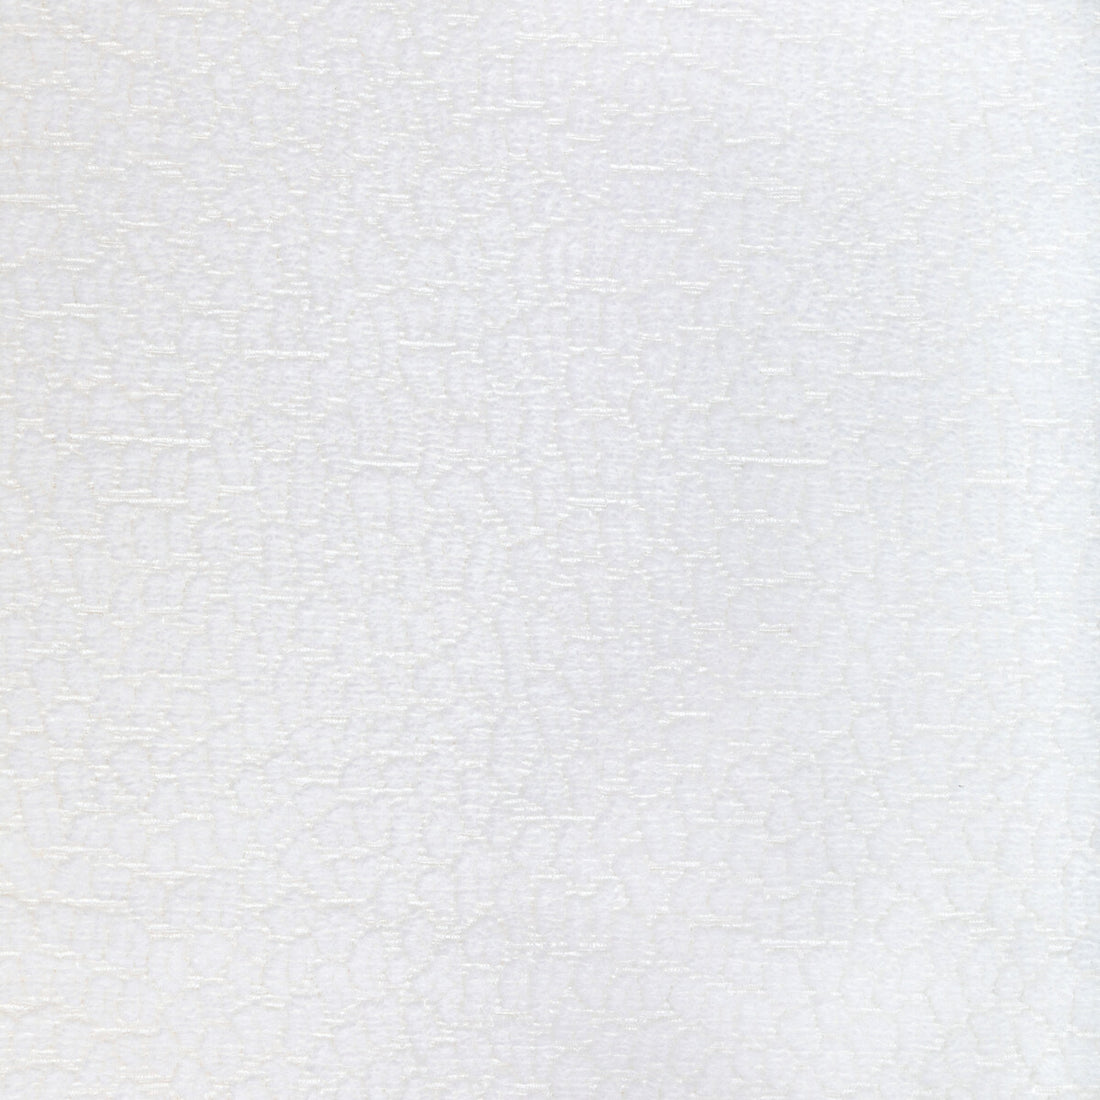 Kravet Smart fabric in 36606-101 color - pattern 36606.101.0 - by Kravet Smart in the Performance Kravetarmor collection